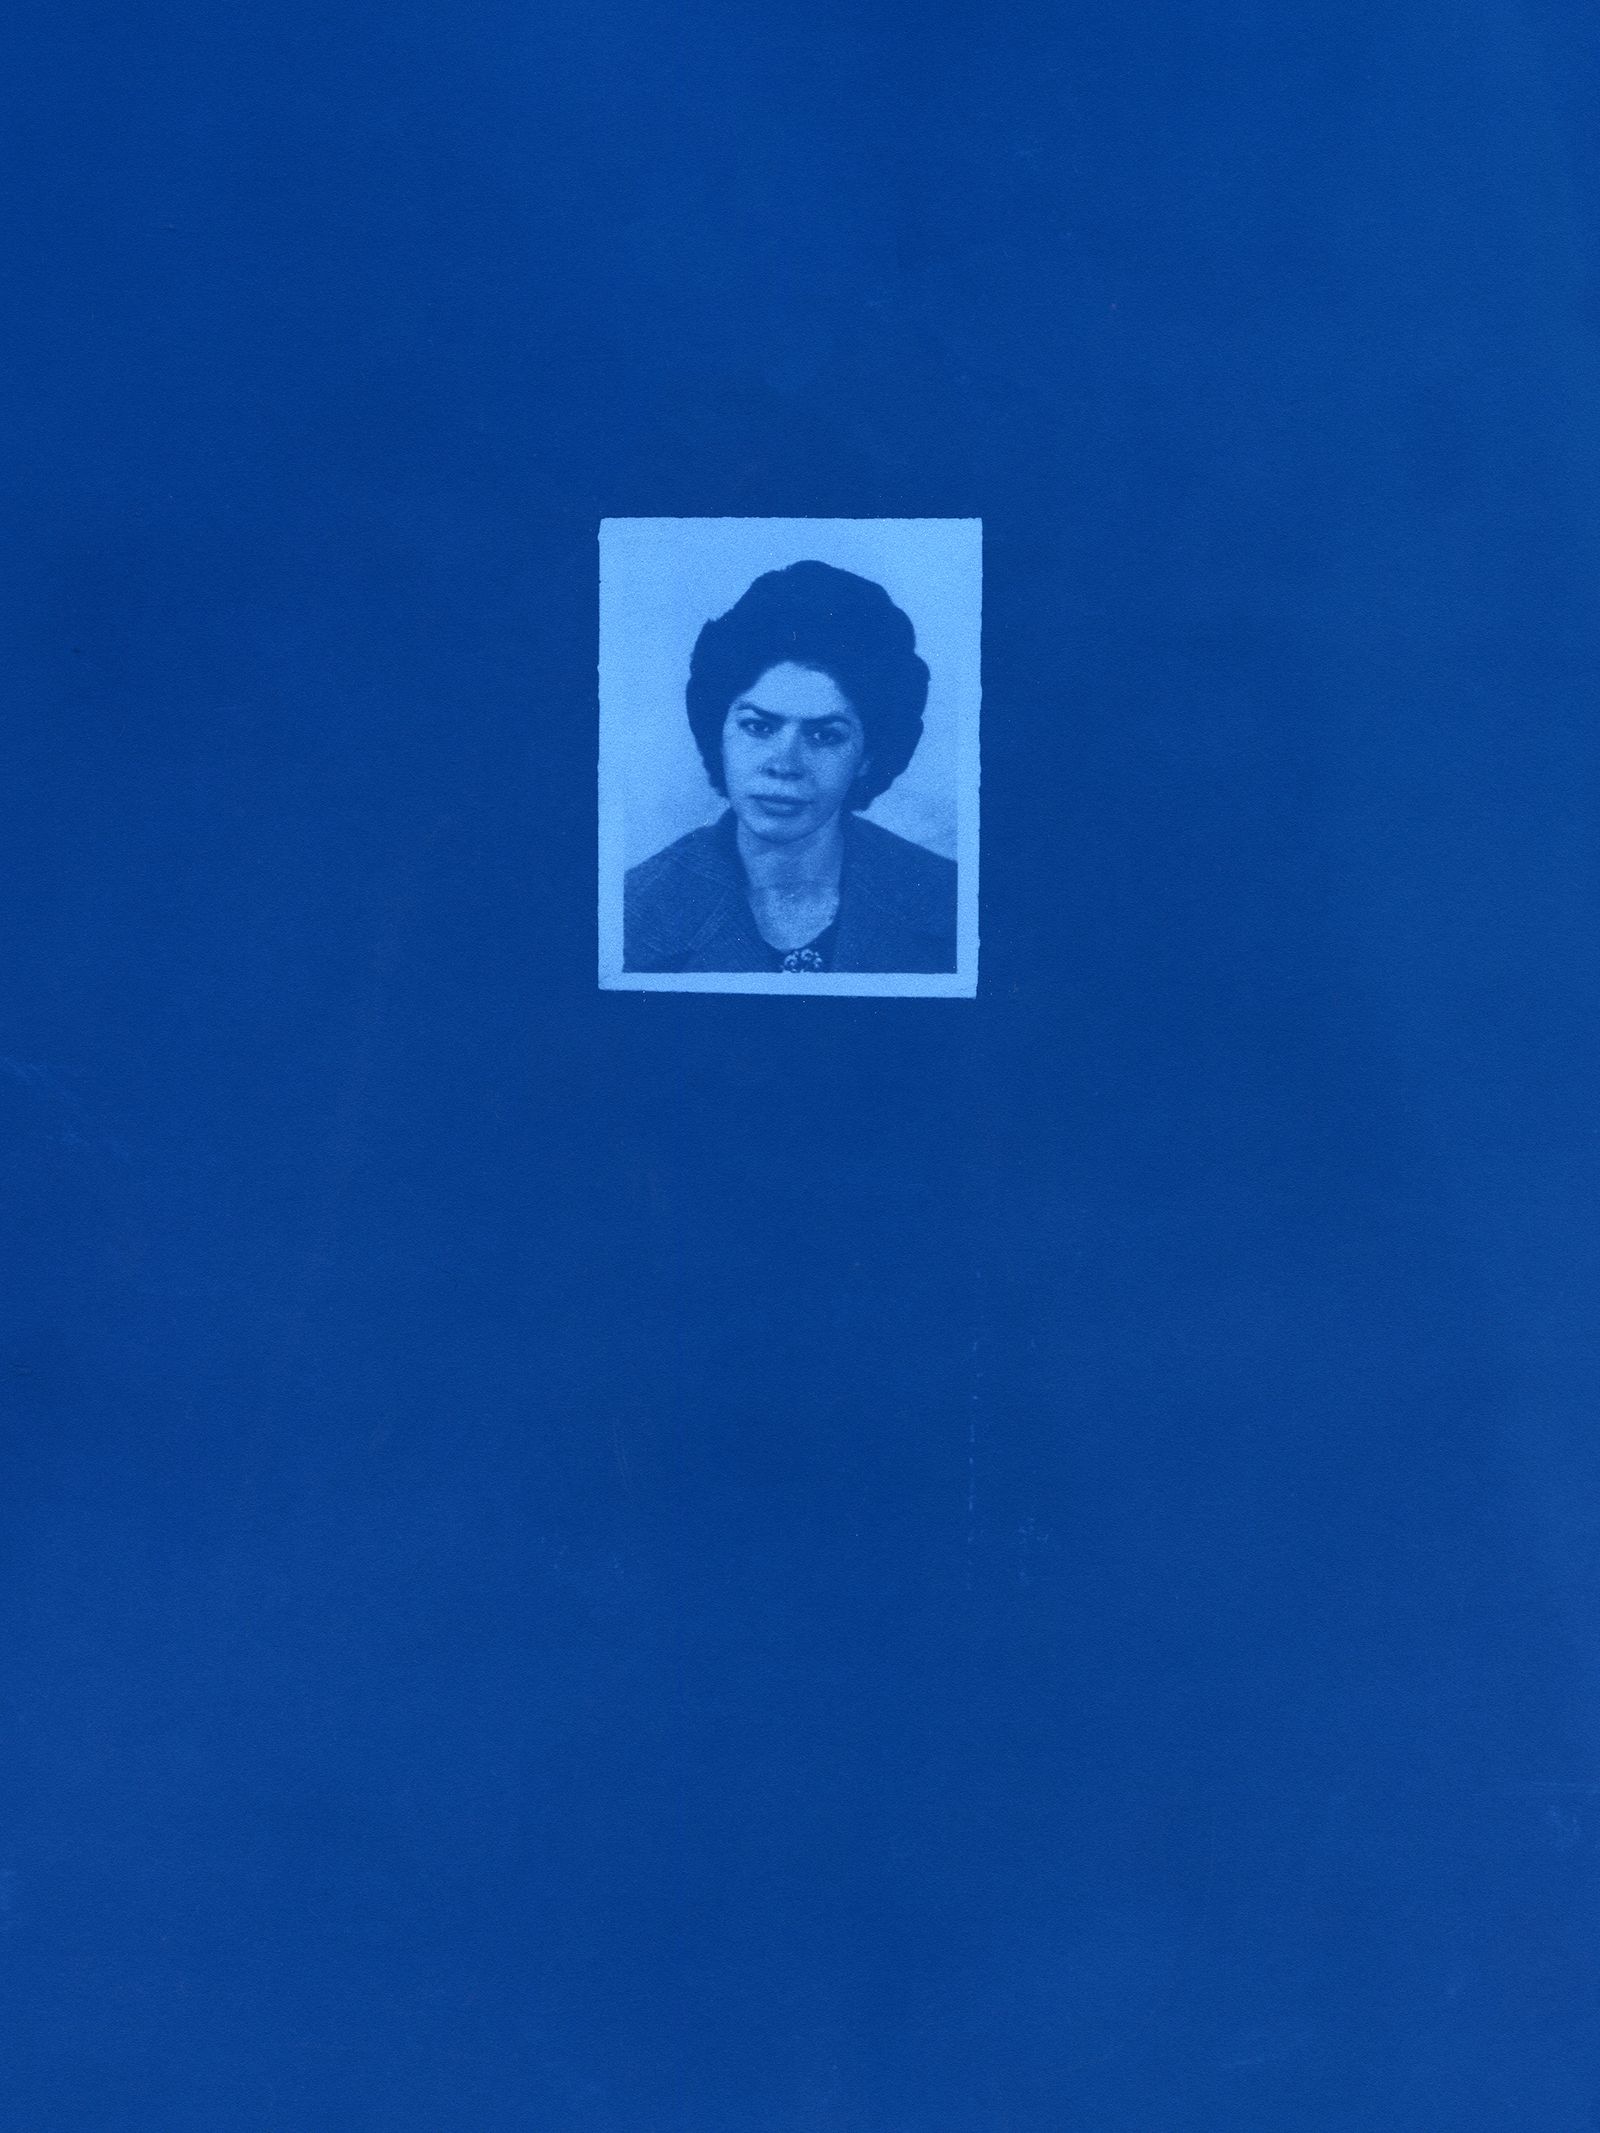 © Daniel Mebarek - BOLIVIA. La Paz. Identity photograph of my grandmother, Yolanda. Cyanotype on mat paper.